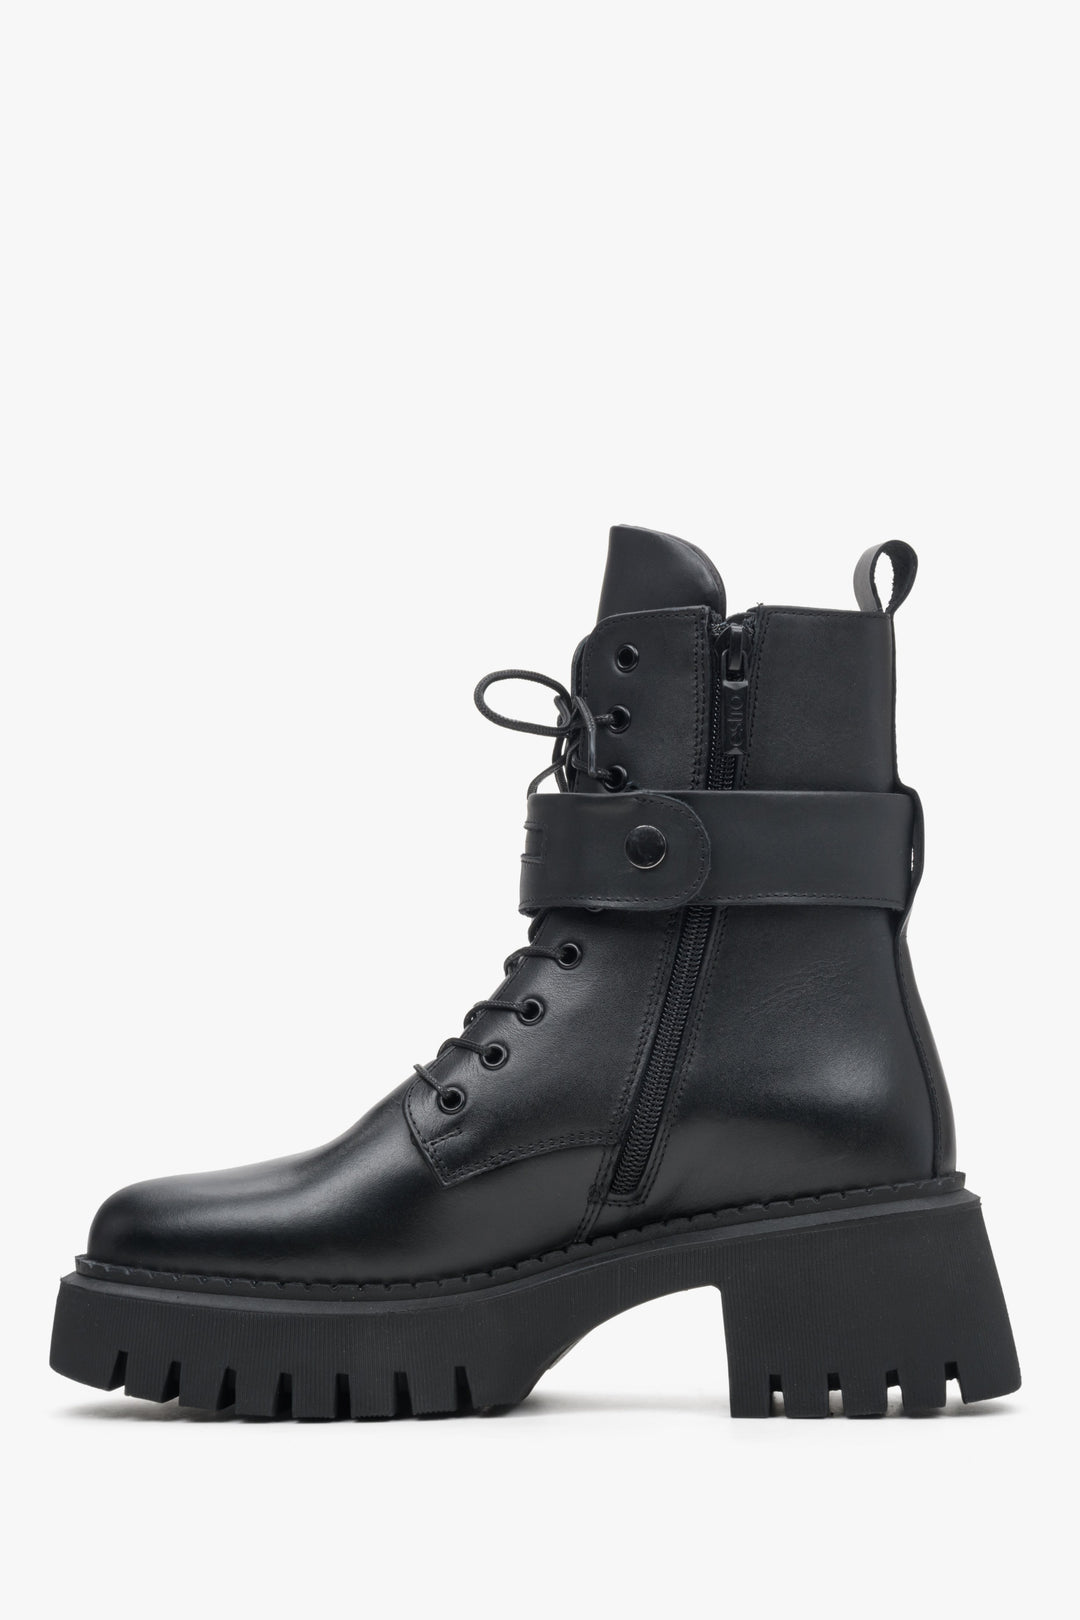 Black leather women's winter boots by Estro - shoe profile.